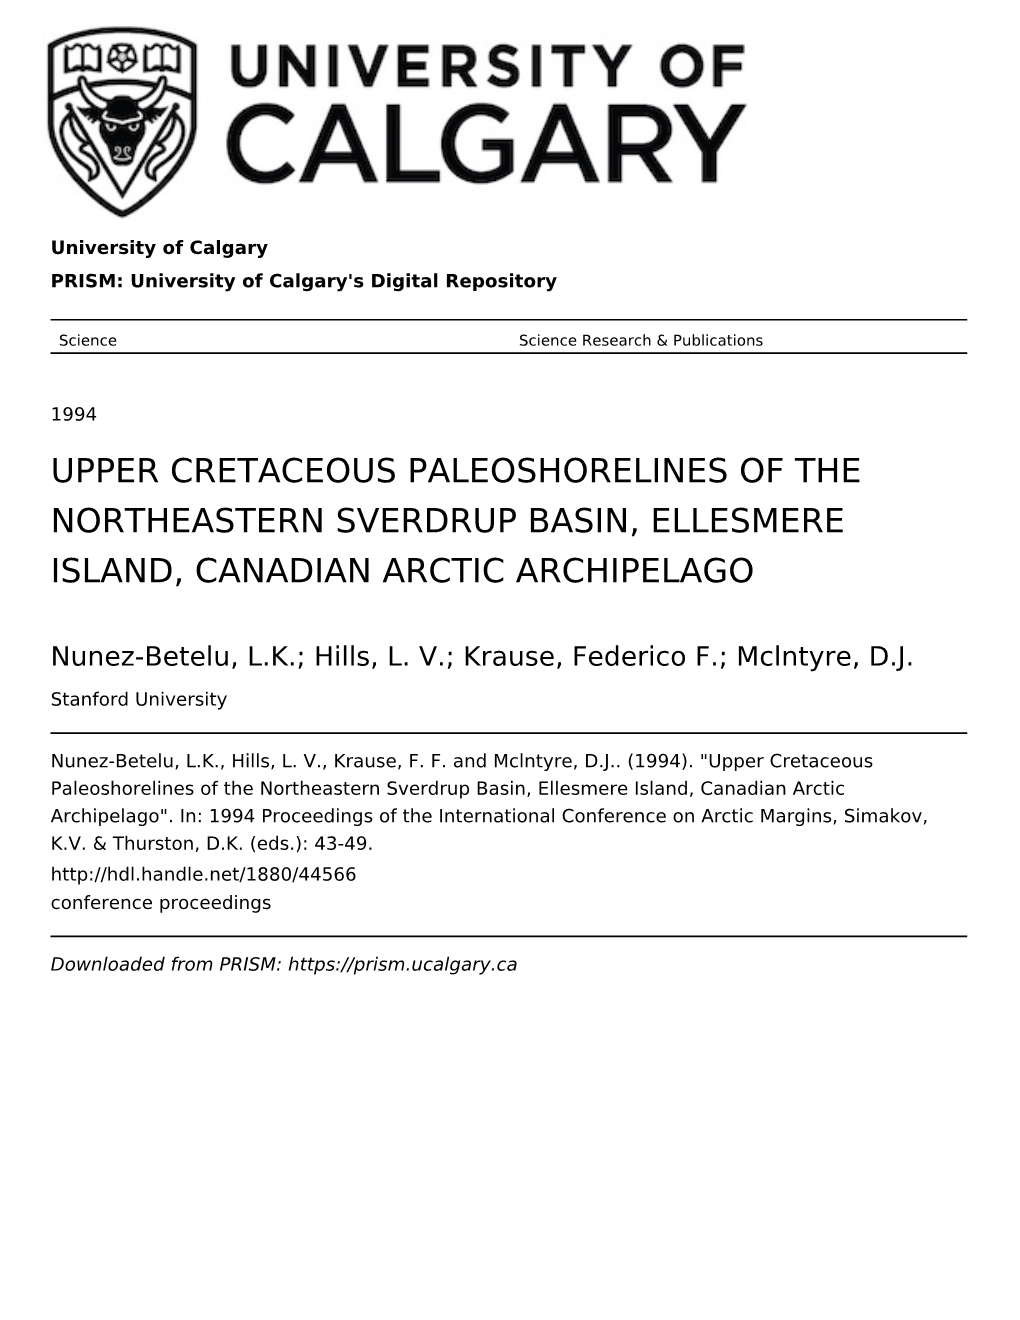 Upper Cretaceous Paleoshorelines of the Northeastern Sverdrup Basin, Ellesmere Island, Canadian Arctic Archipelago